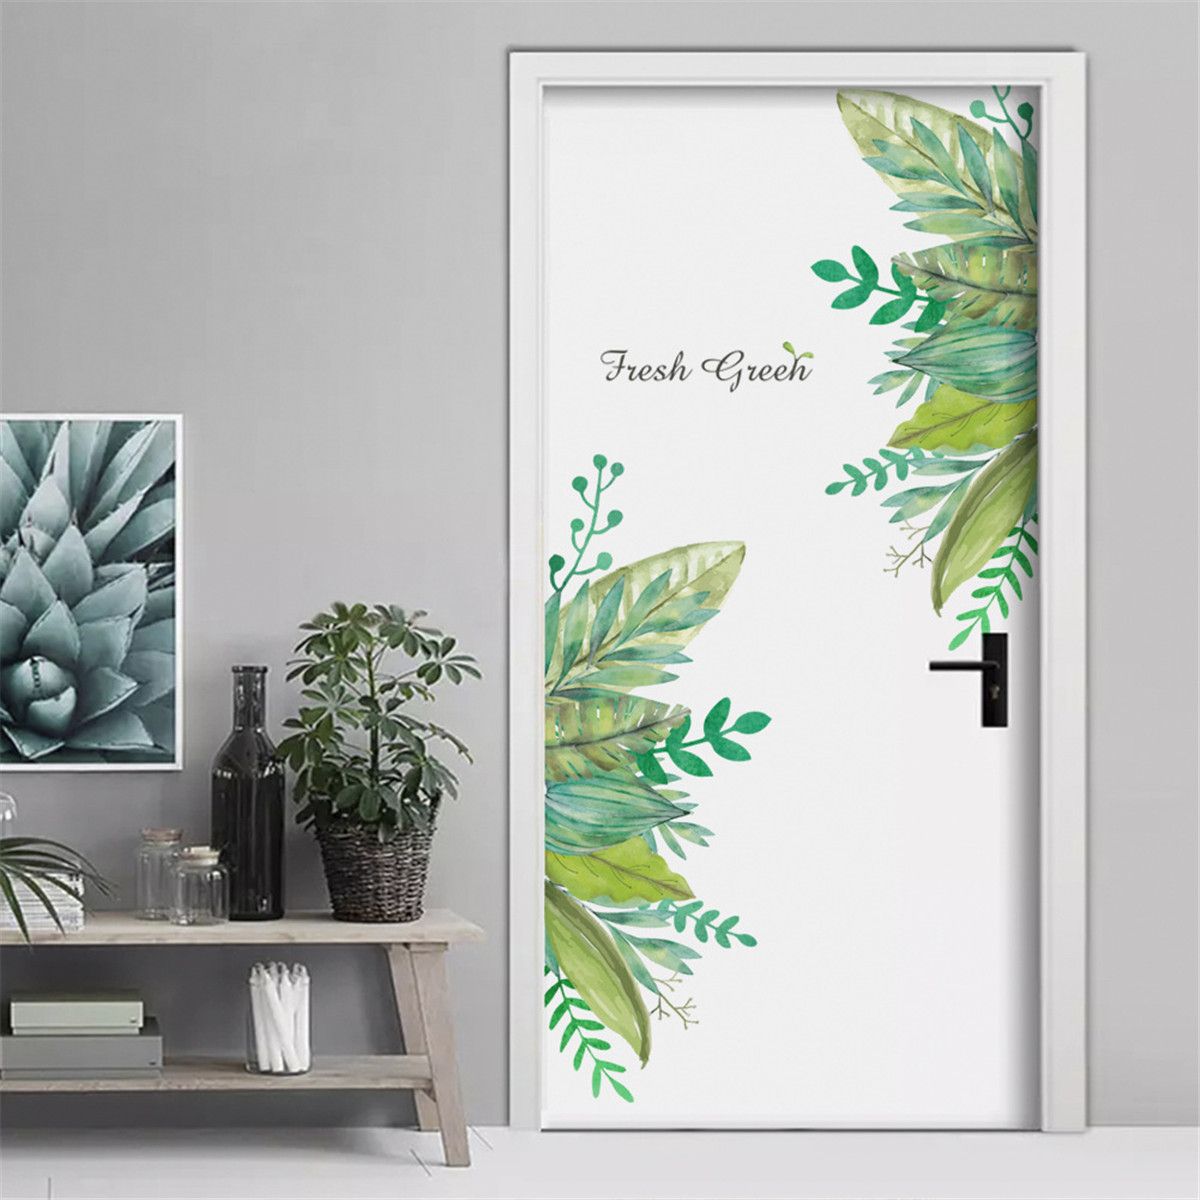 70x50cm-Green-Leaves-PVC-Wall-Sticker-Mural-Room-Background-Decor-DIY-Art-Decal-1602241